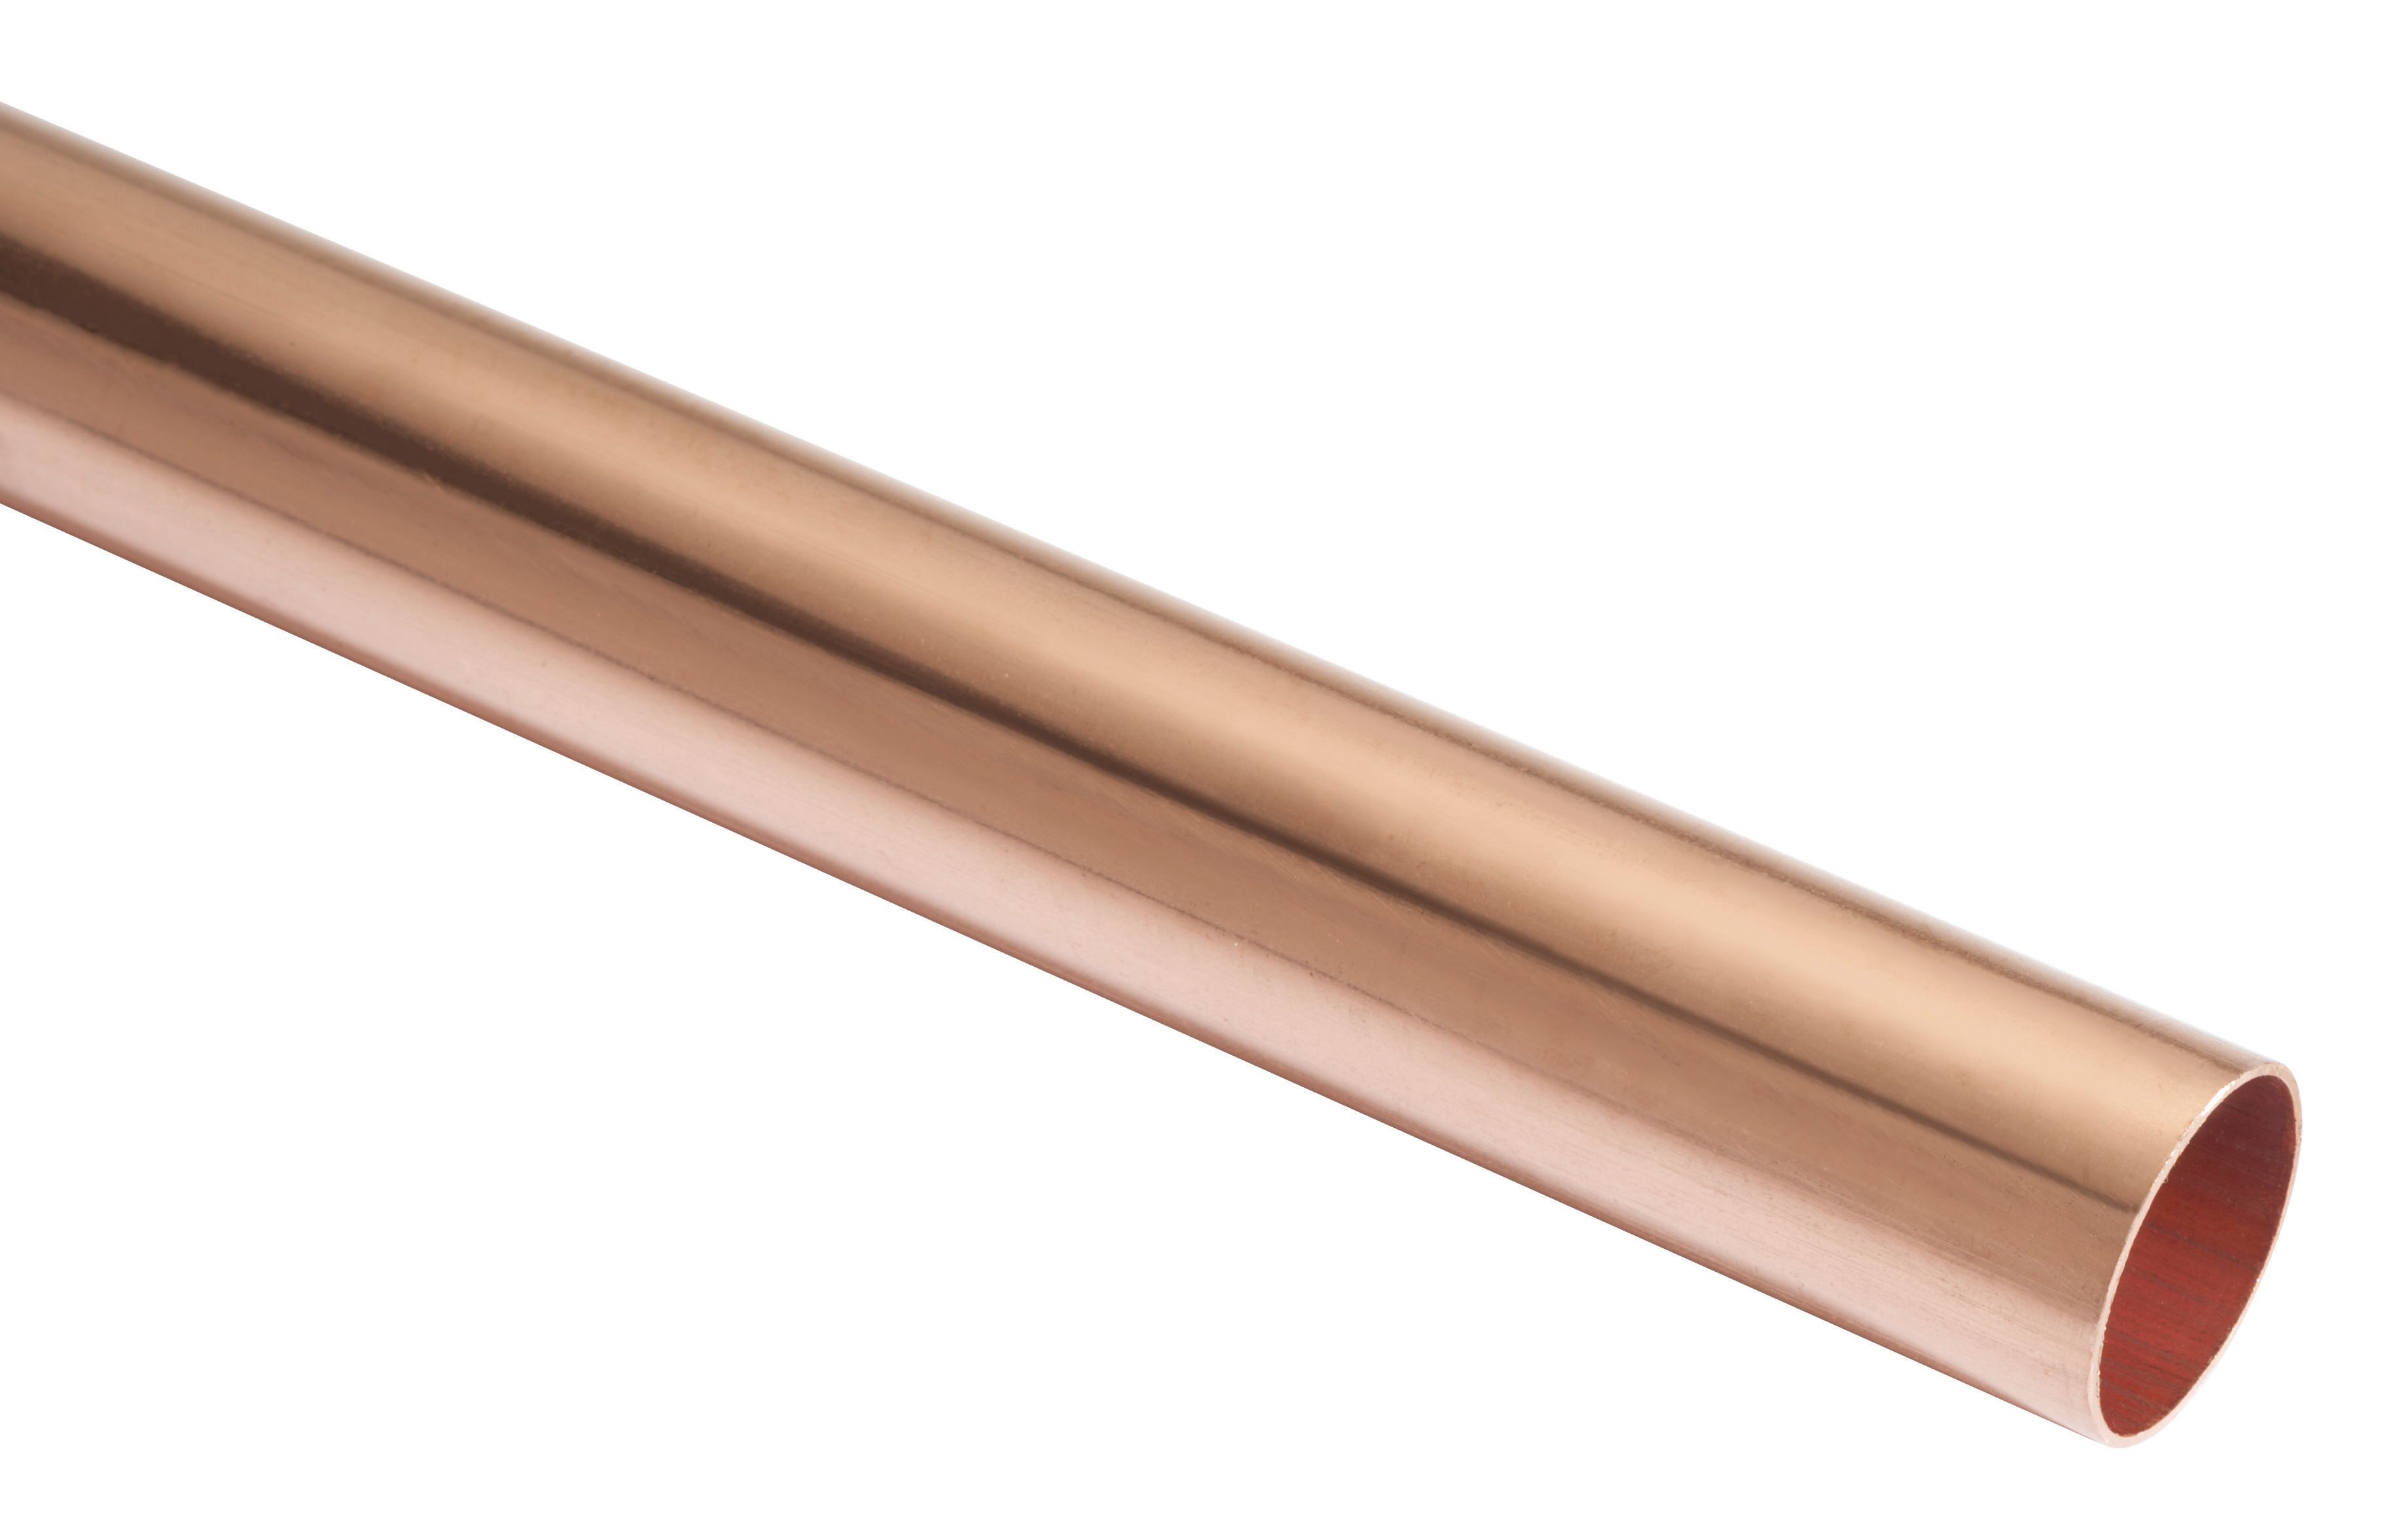 Wednesbury Copper Pipe - 15mm x 3m